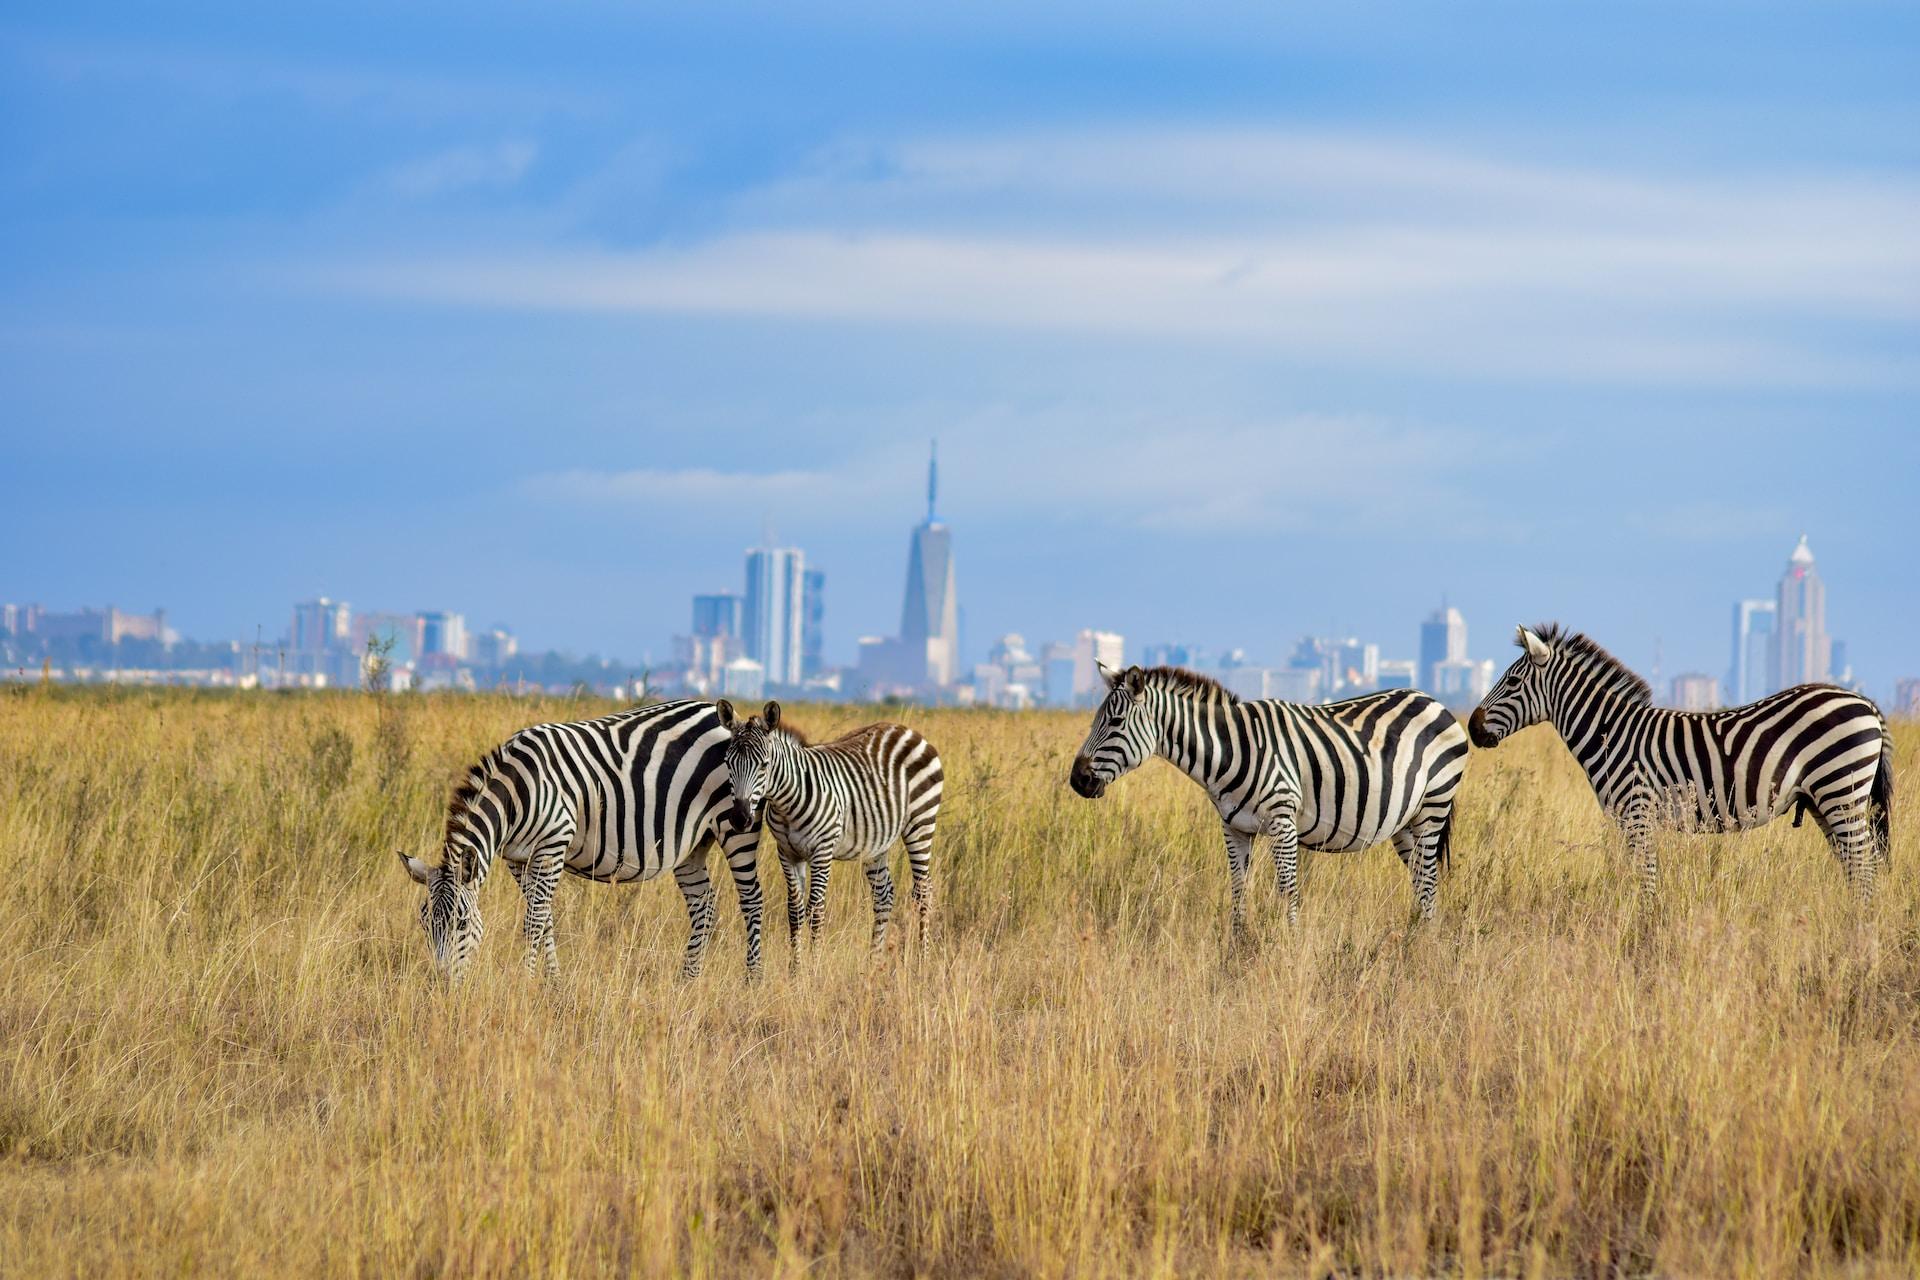 Half Day Nairobi National Park Tour: Exploring Wildlife In The City